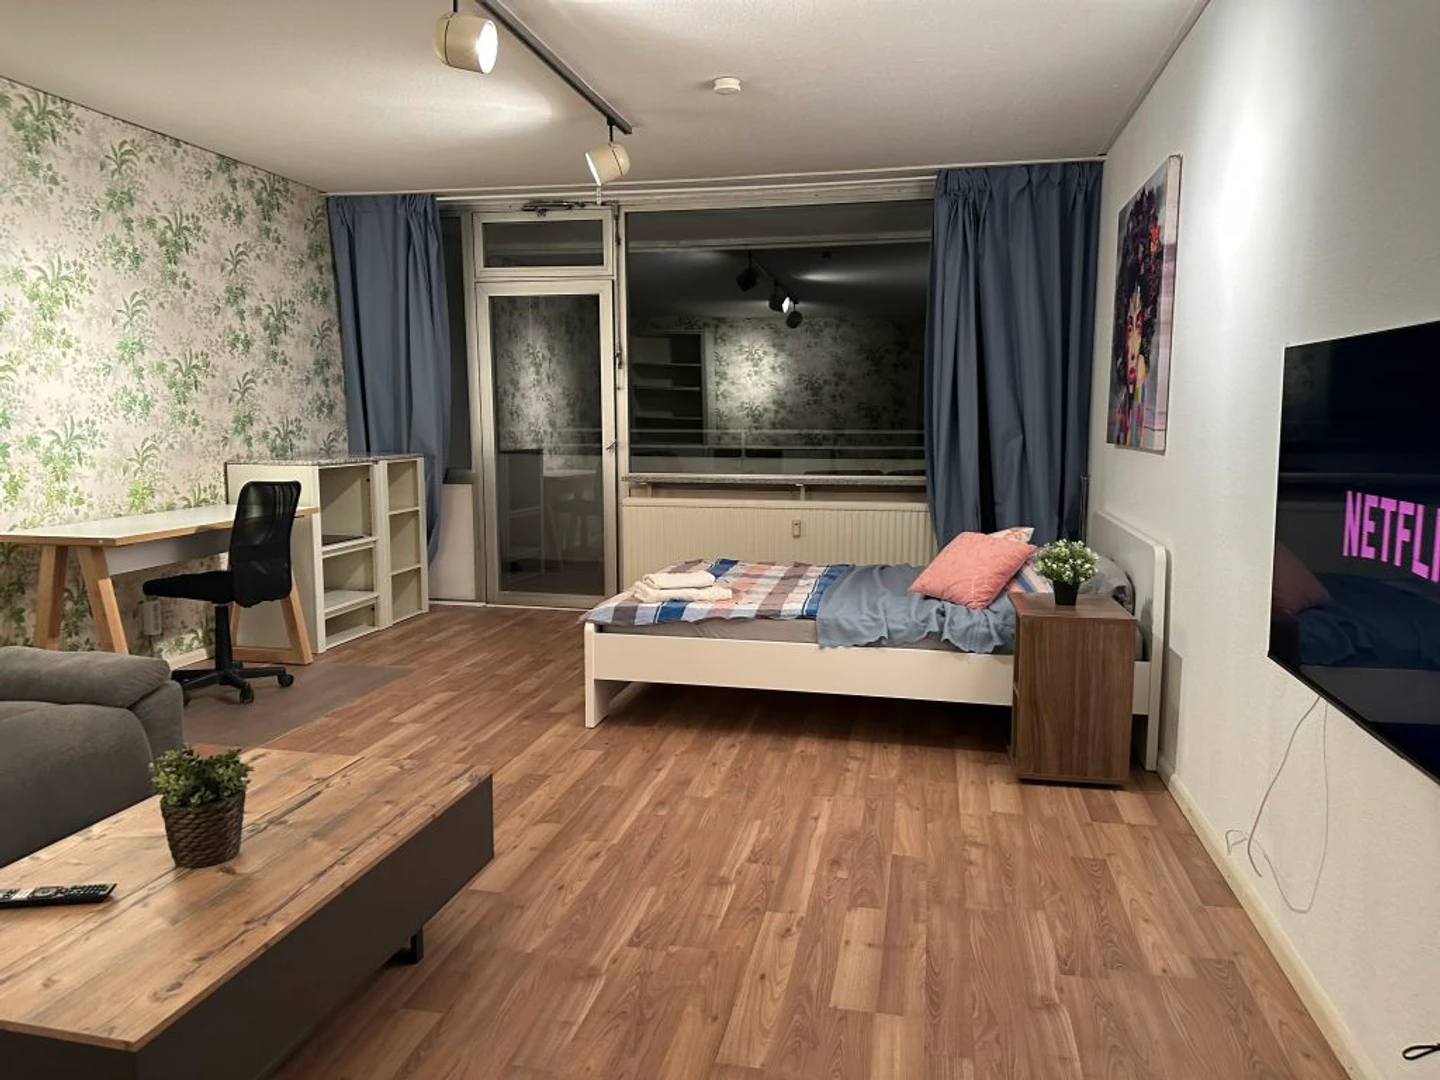 Entire fully furnished flat in Bonn